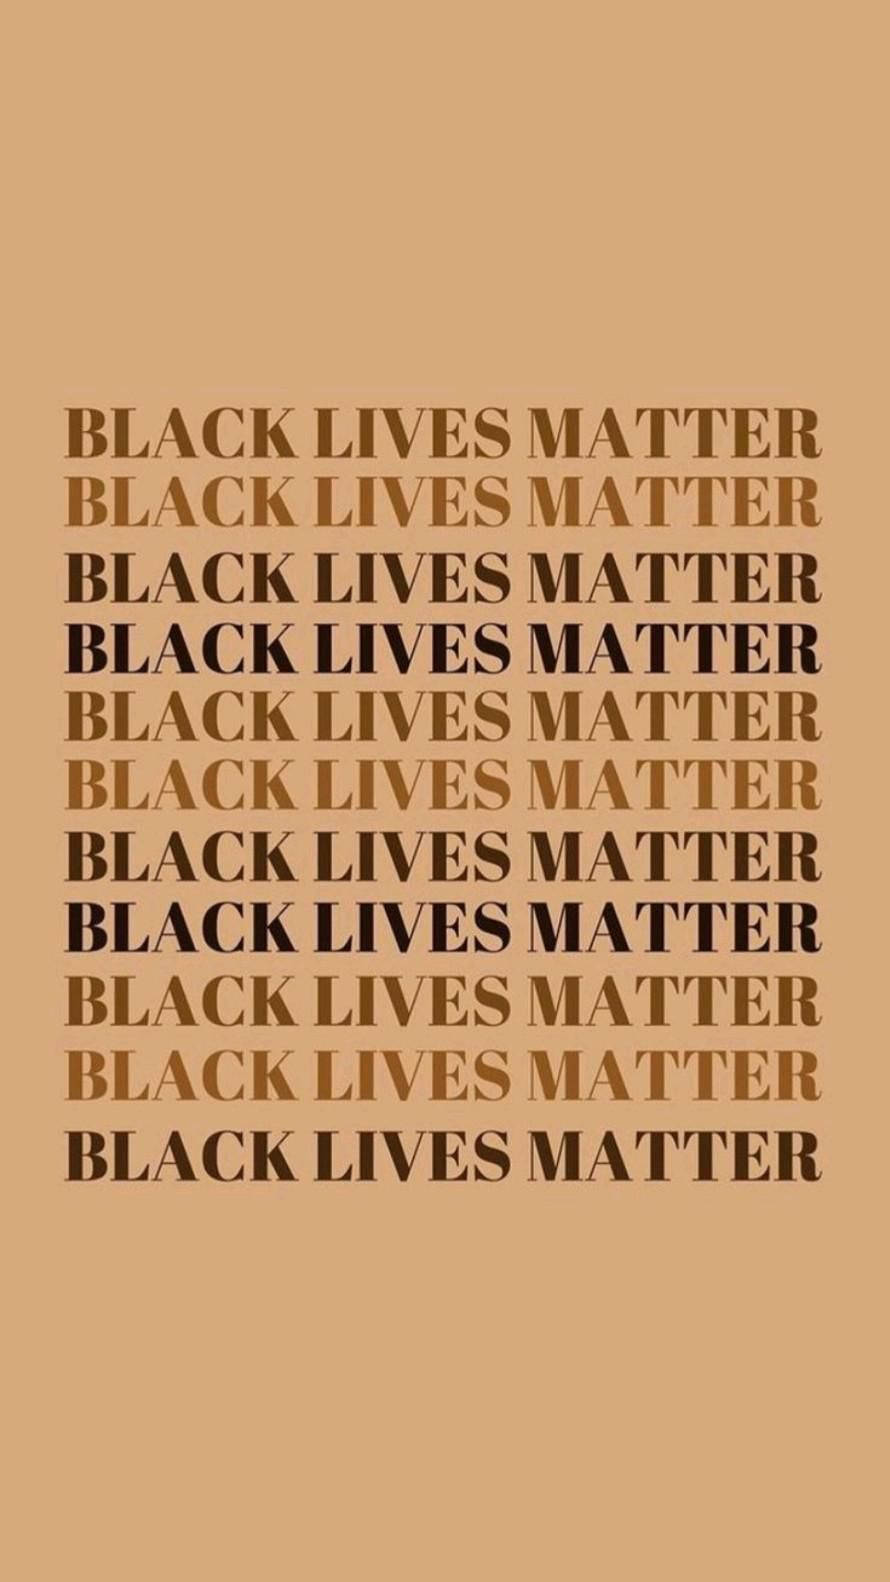 Empowering Black Lives Matter Poster Wallpaper